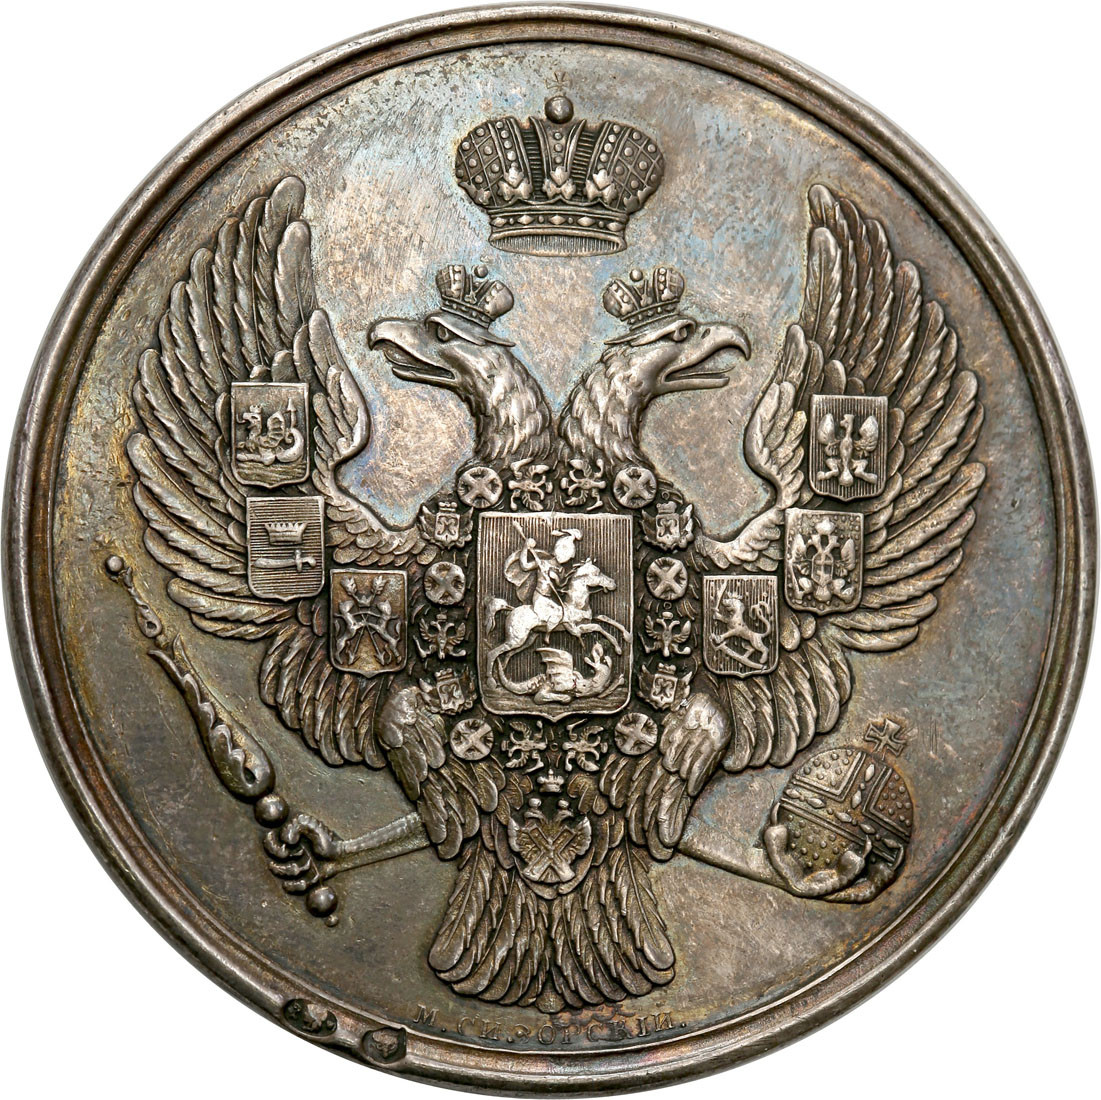 Rosja, Mikołaj l.Medal nagrodowy za naukę, gimnazjalny (1835) - SREBRO